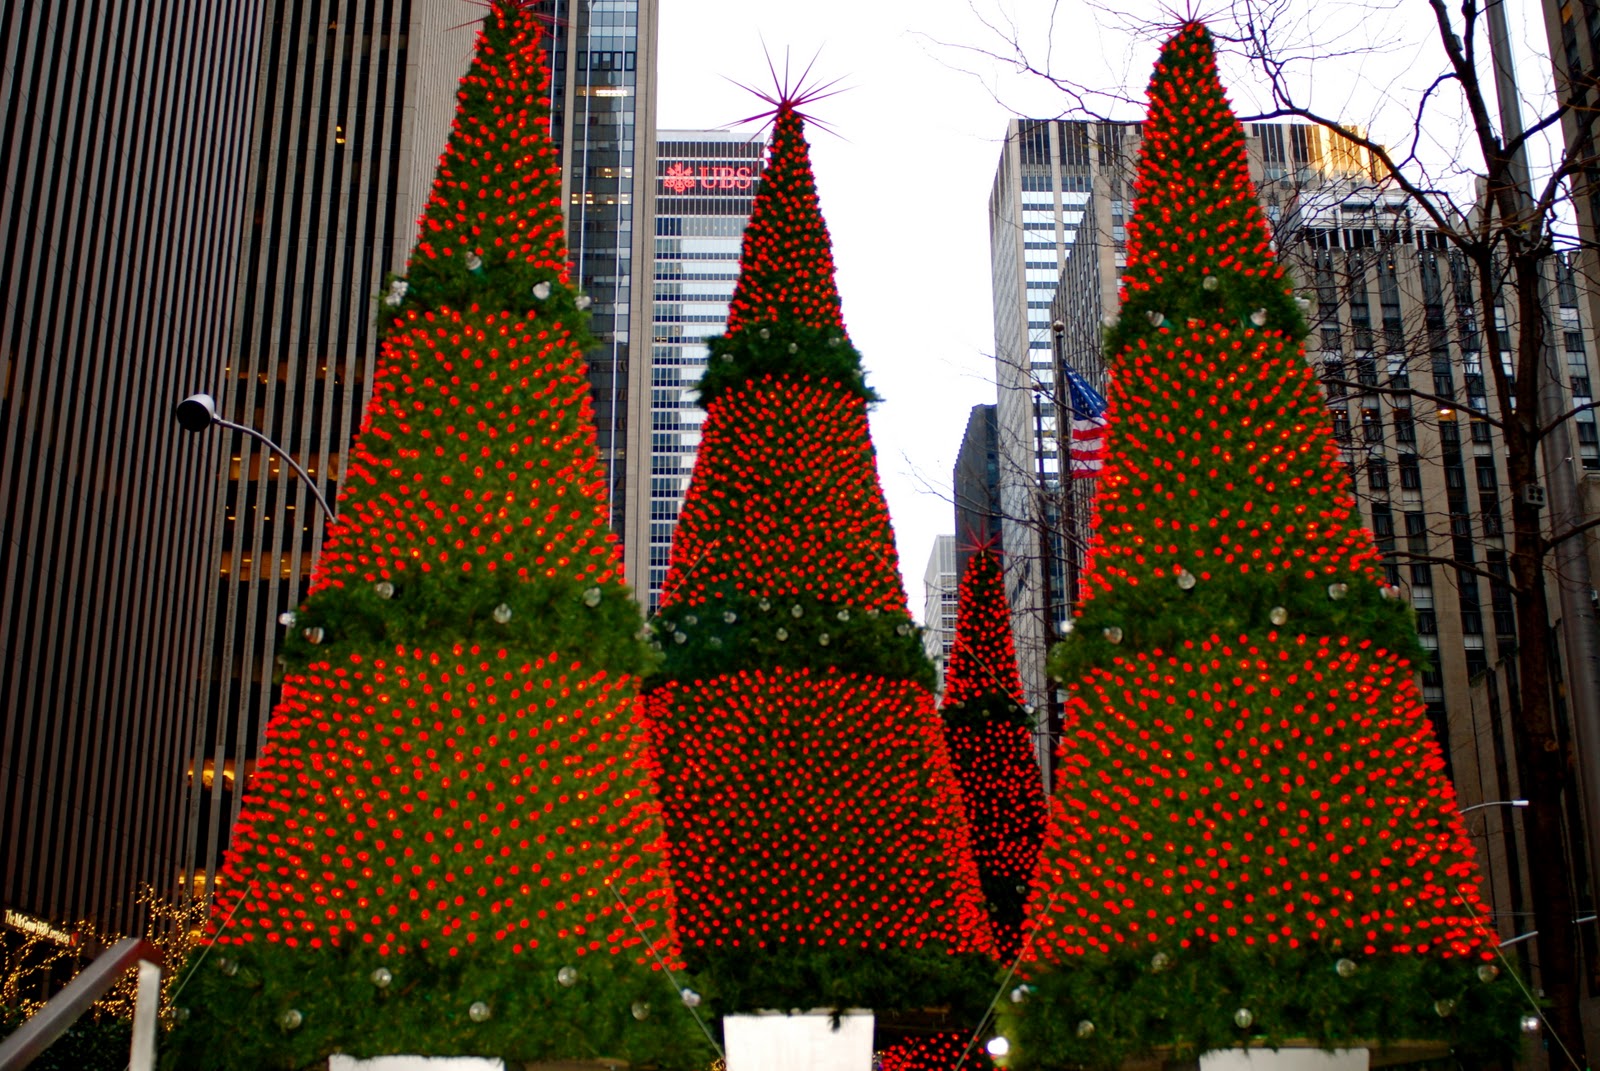 NYC ♥ NYC: Christmas Holiday Decorations on Sixth Avenue